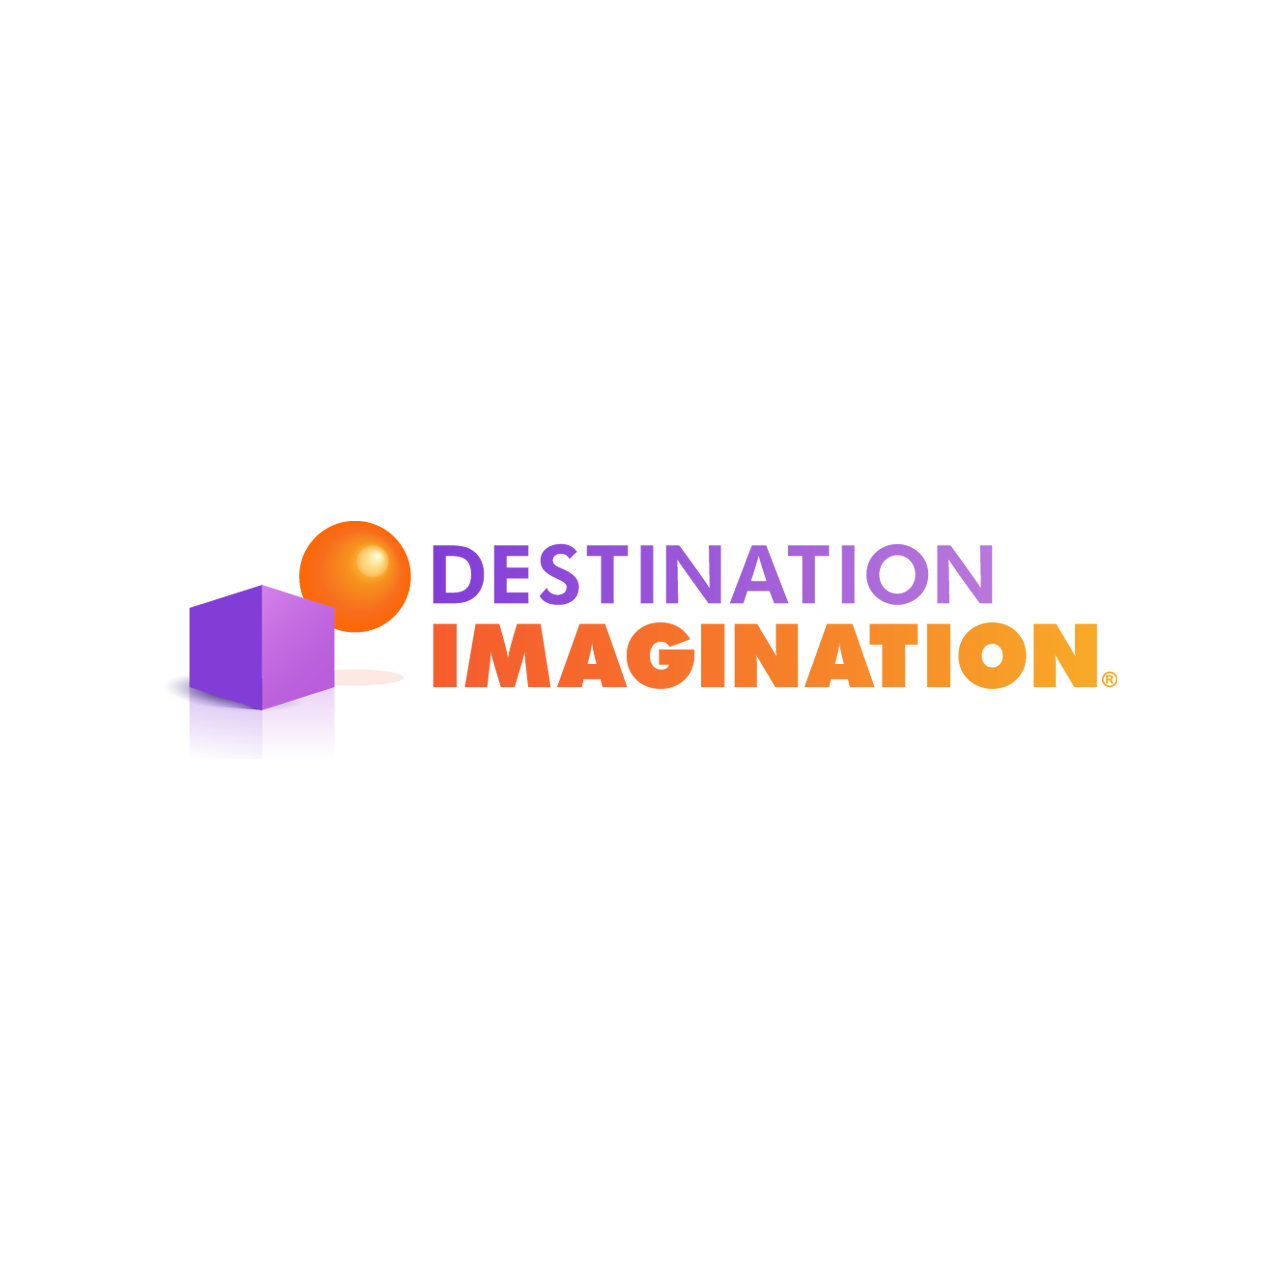 Destination Imagination